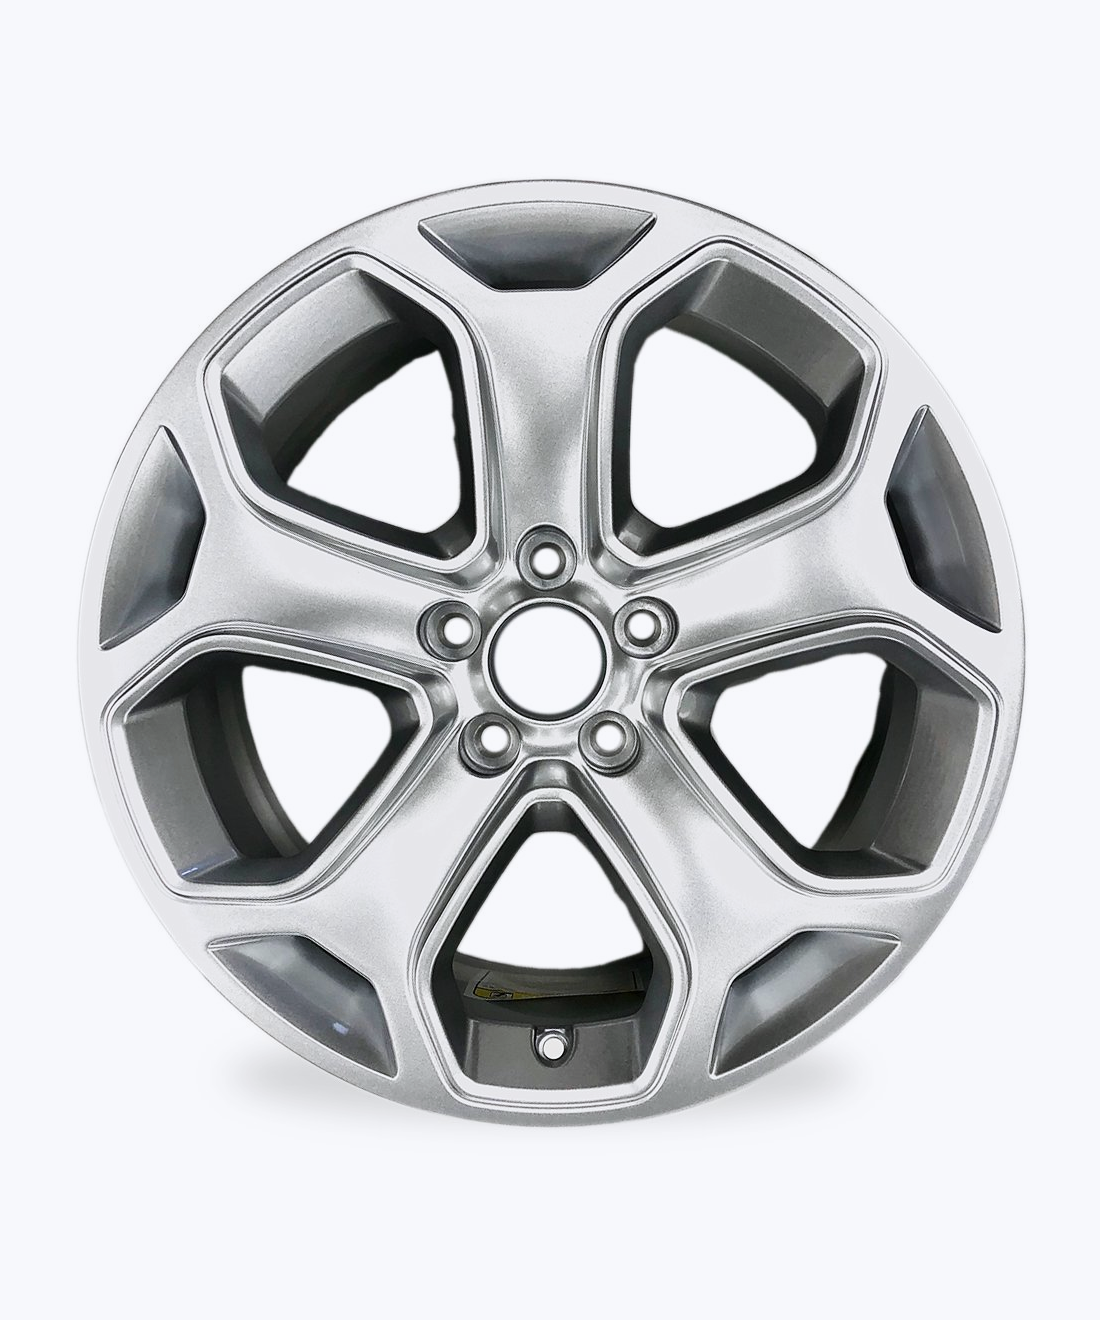 Silver wheels rims